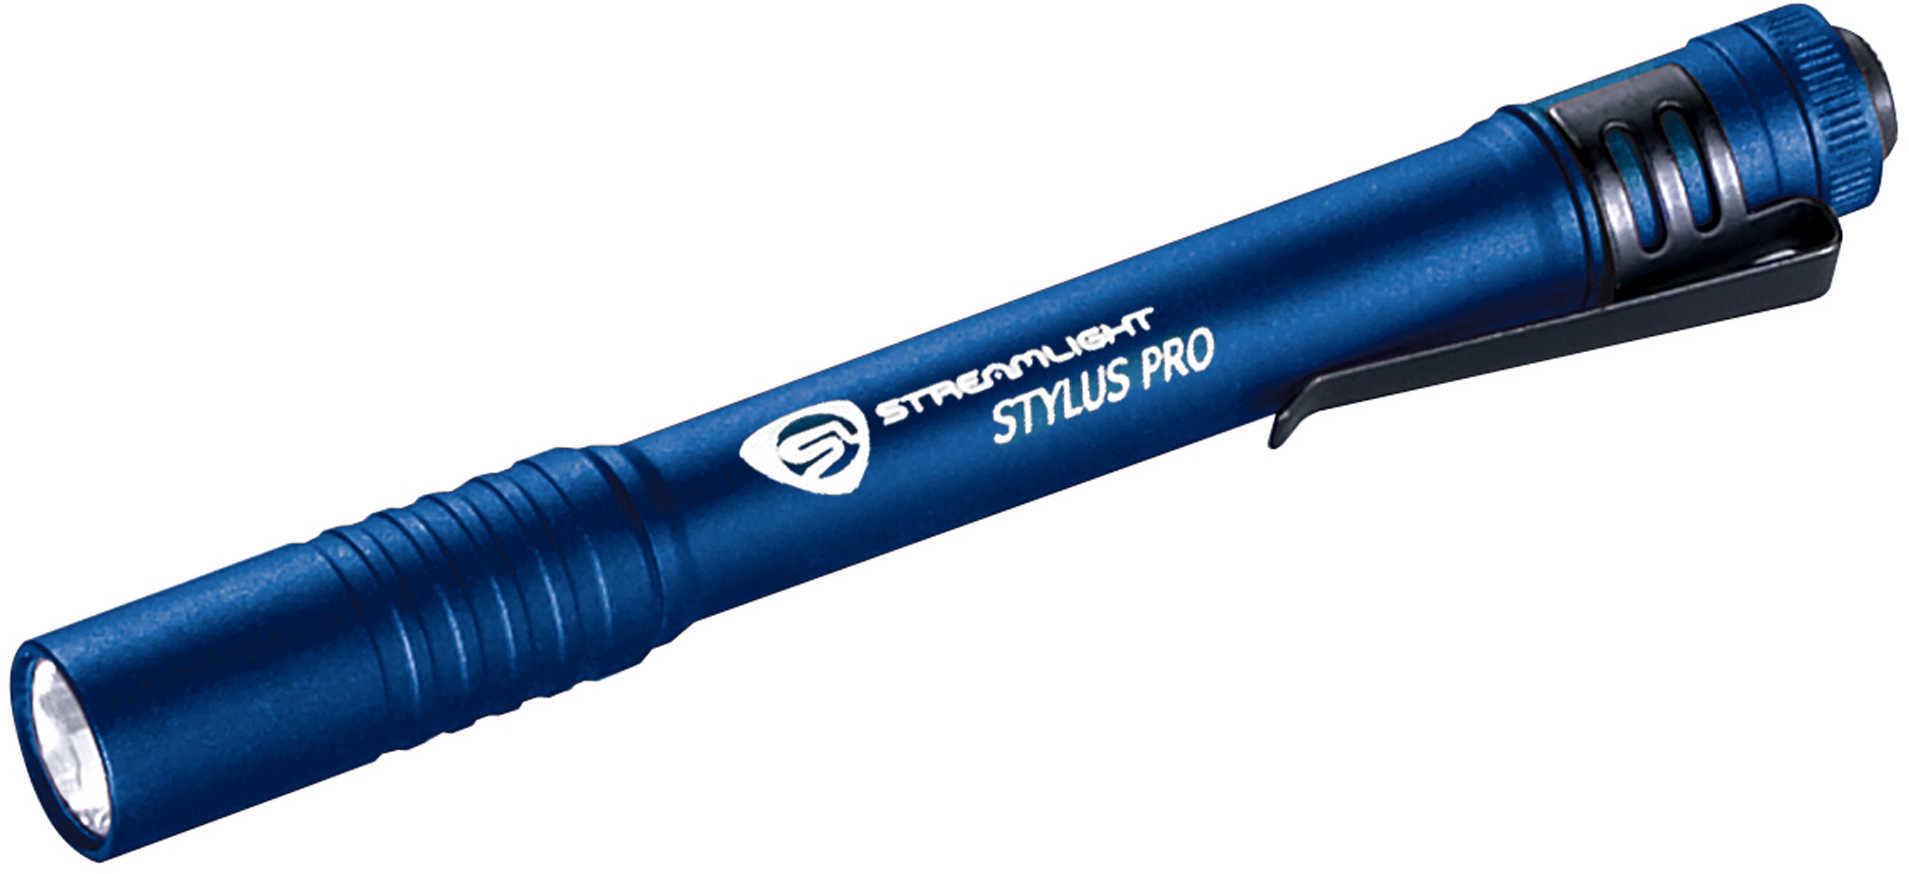 Streamlight Stylus Pro Blue 66122